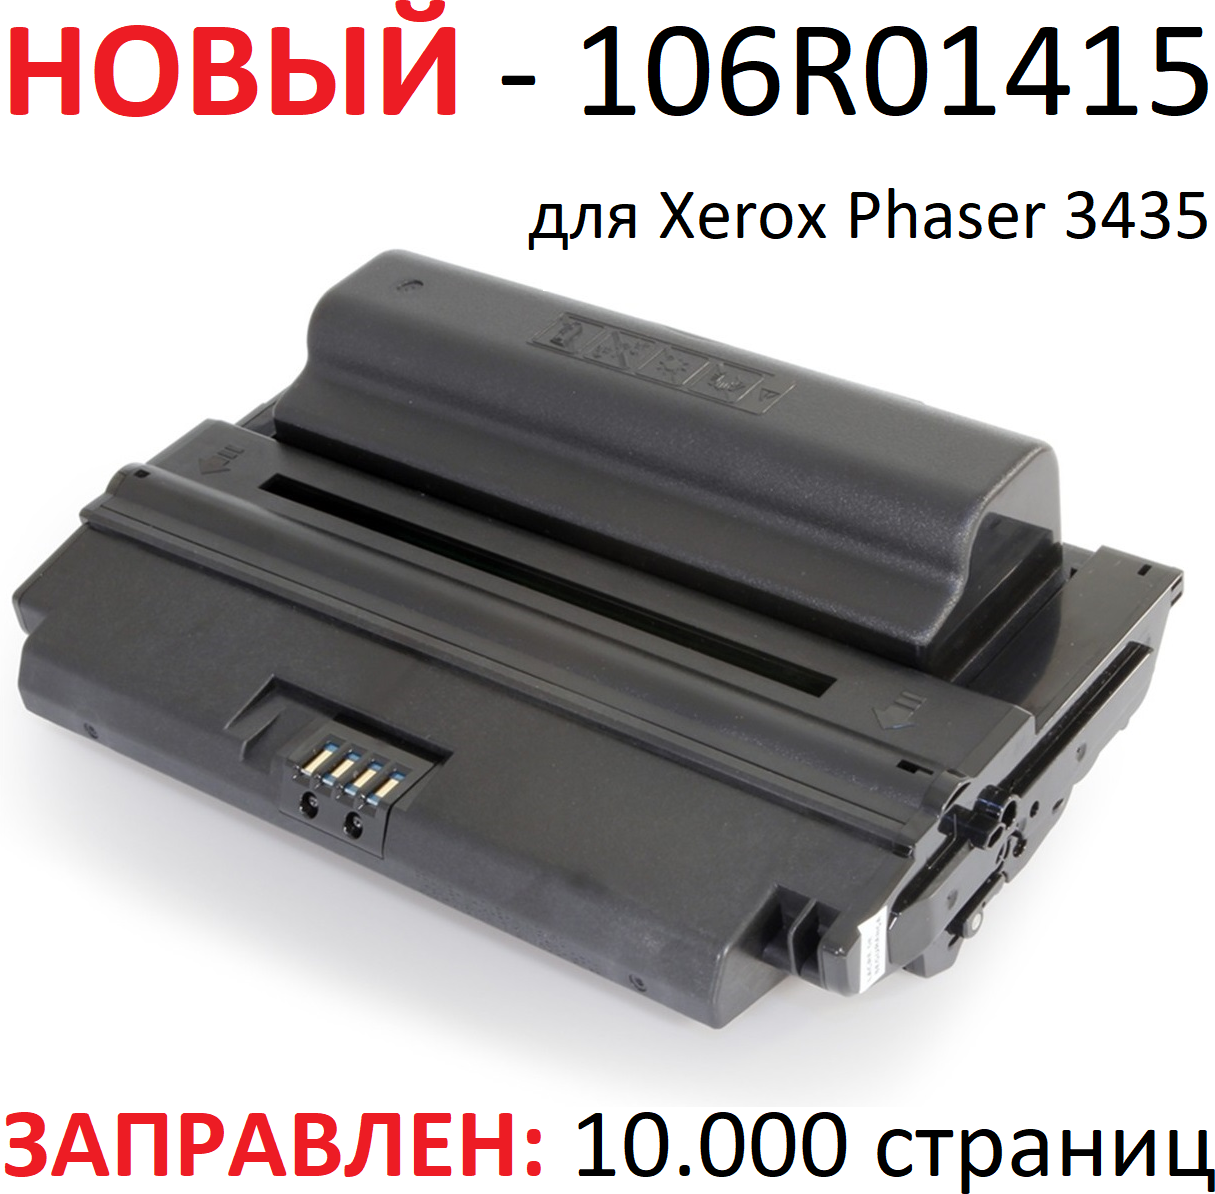 Картридж для Xerox Phaser 3435 3435dn - 106R01415 - (10.000 страниц) экономичный - UNITON